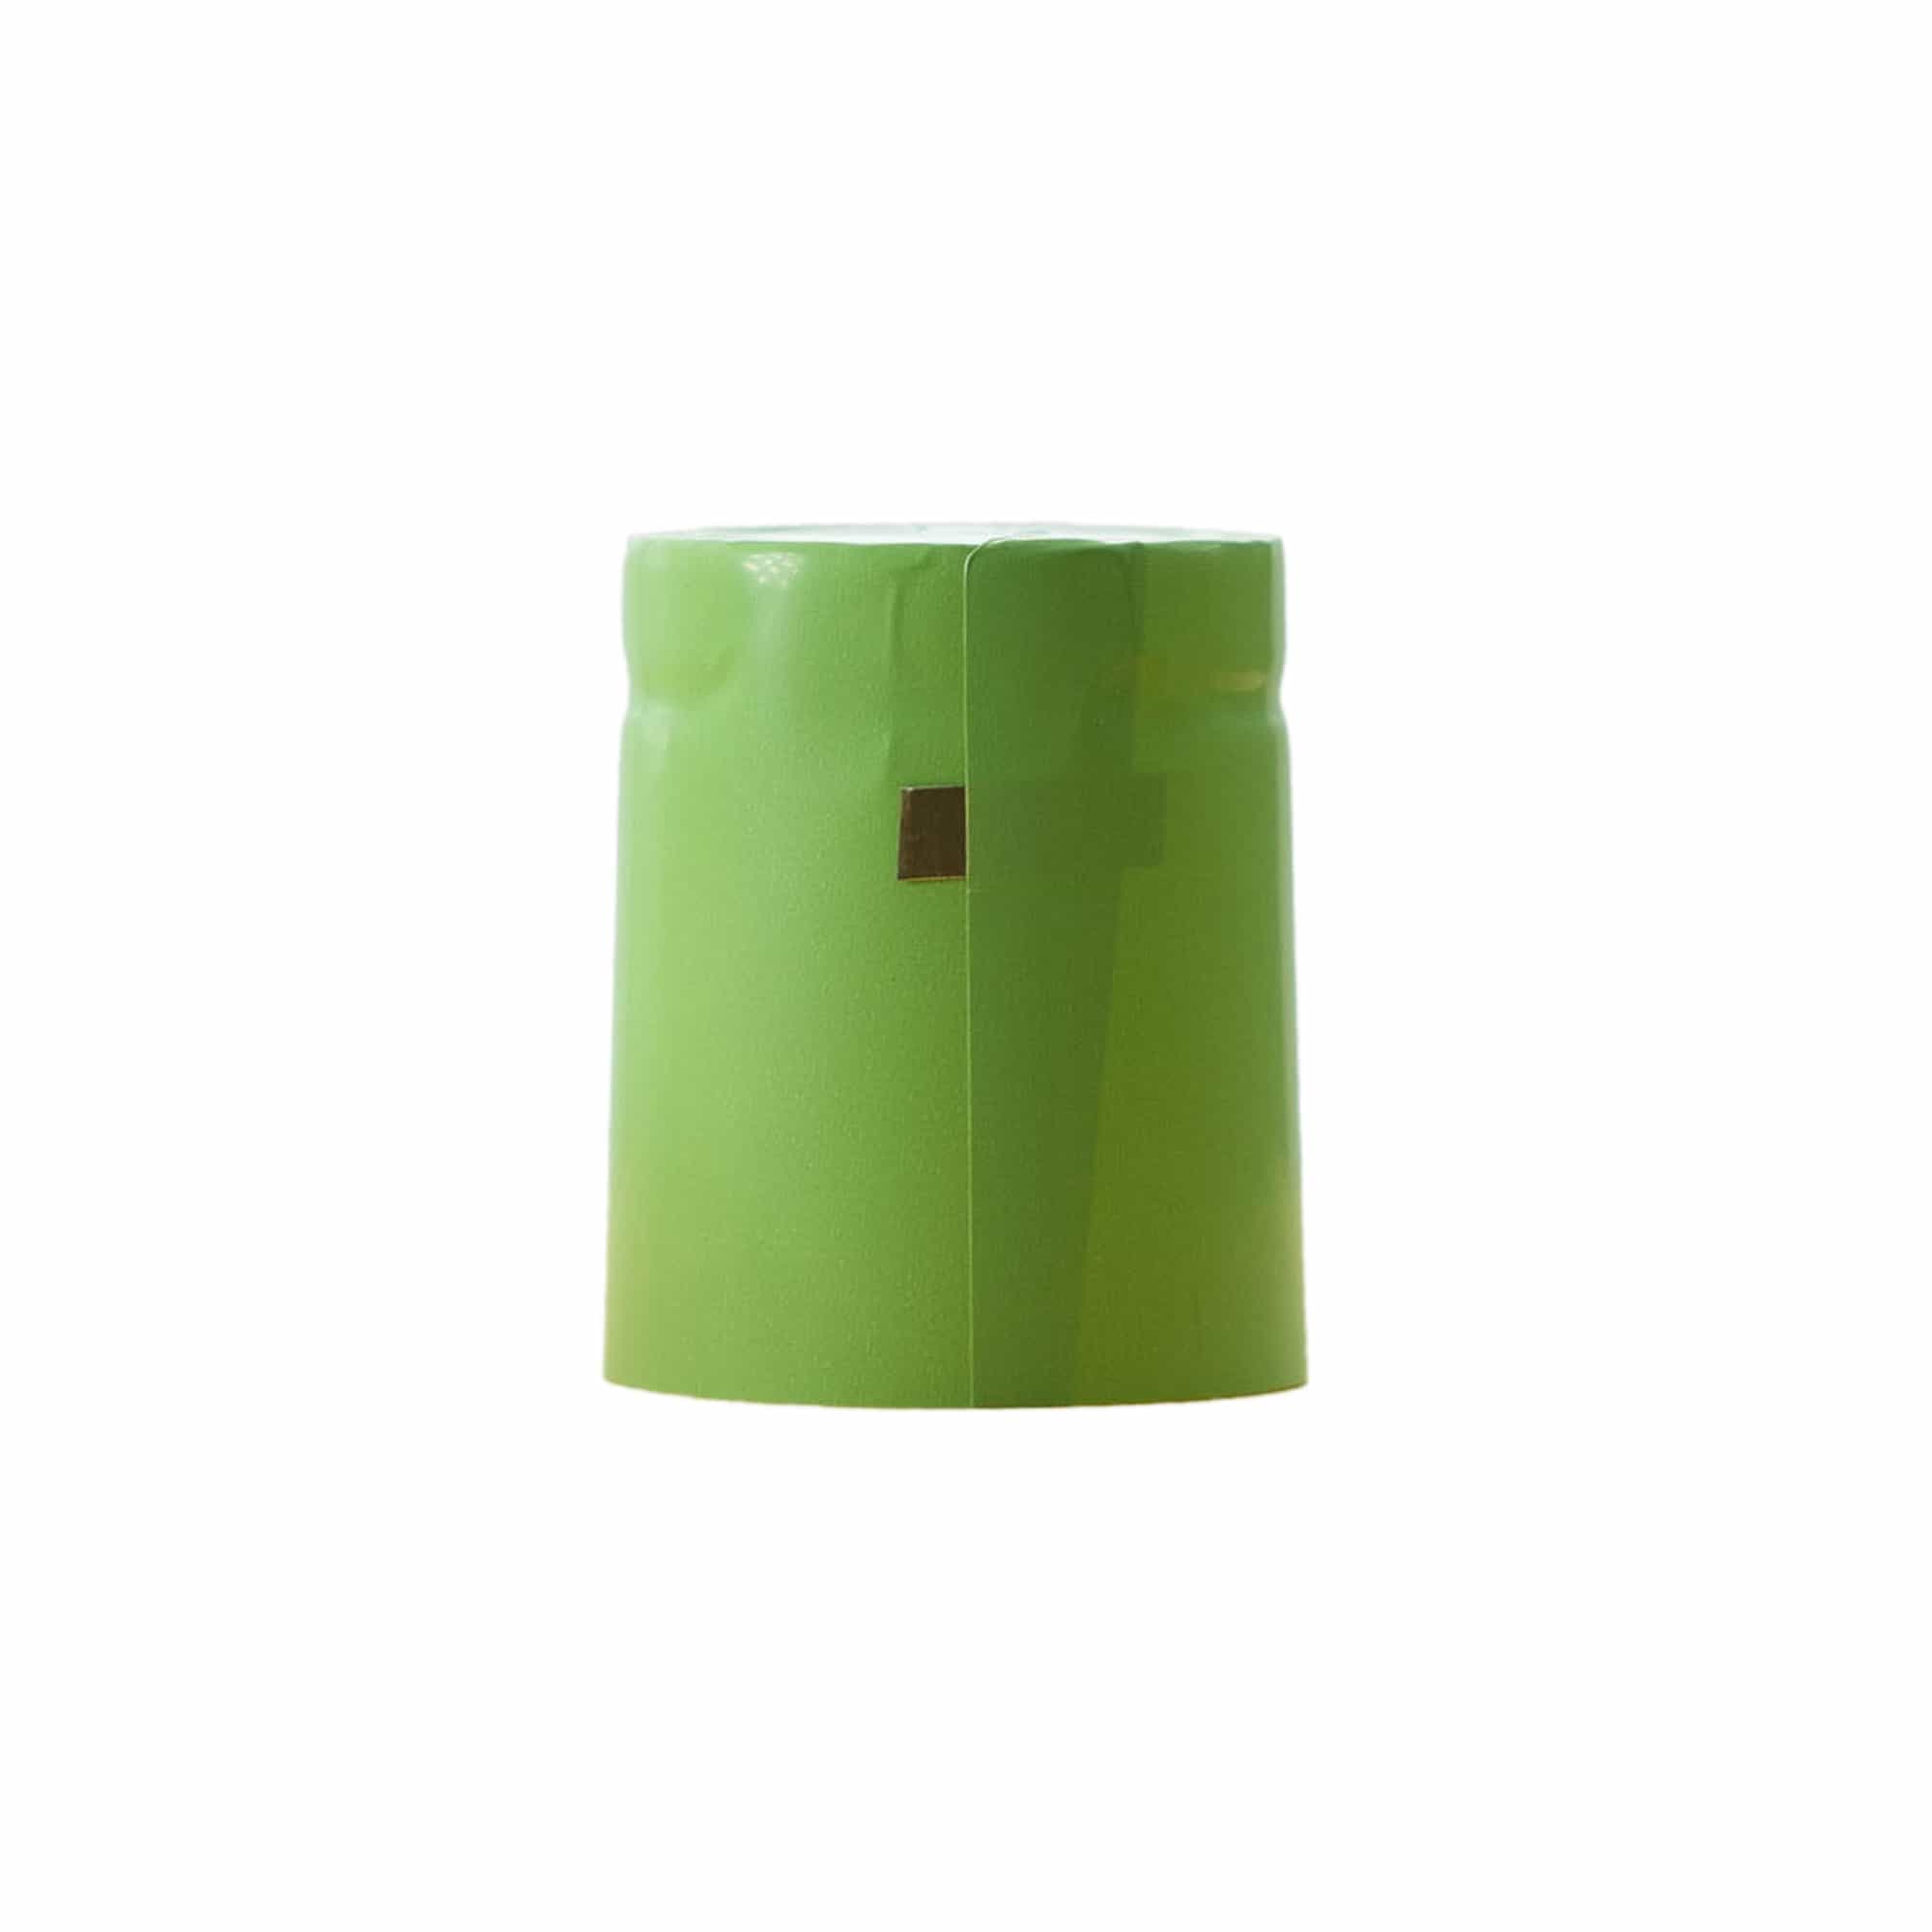 Heat shrink capsule 32x41, PVC plastic, lime green